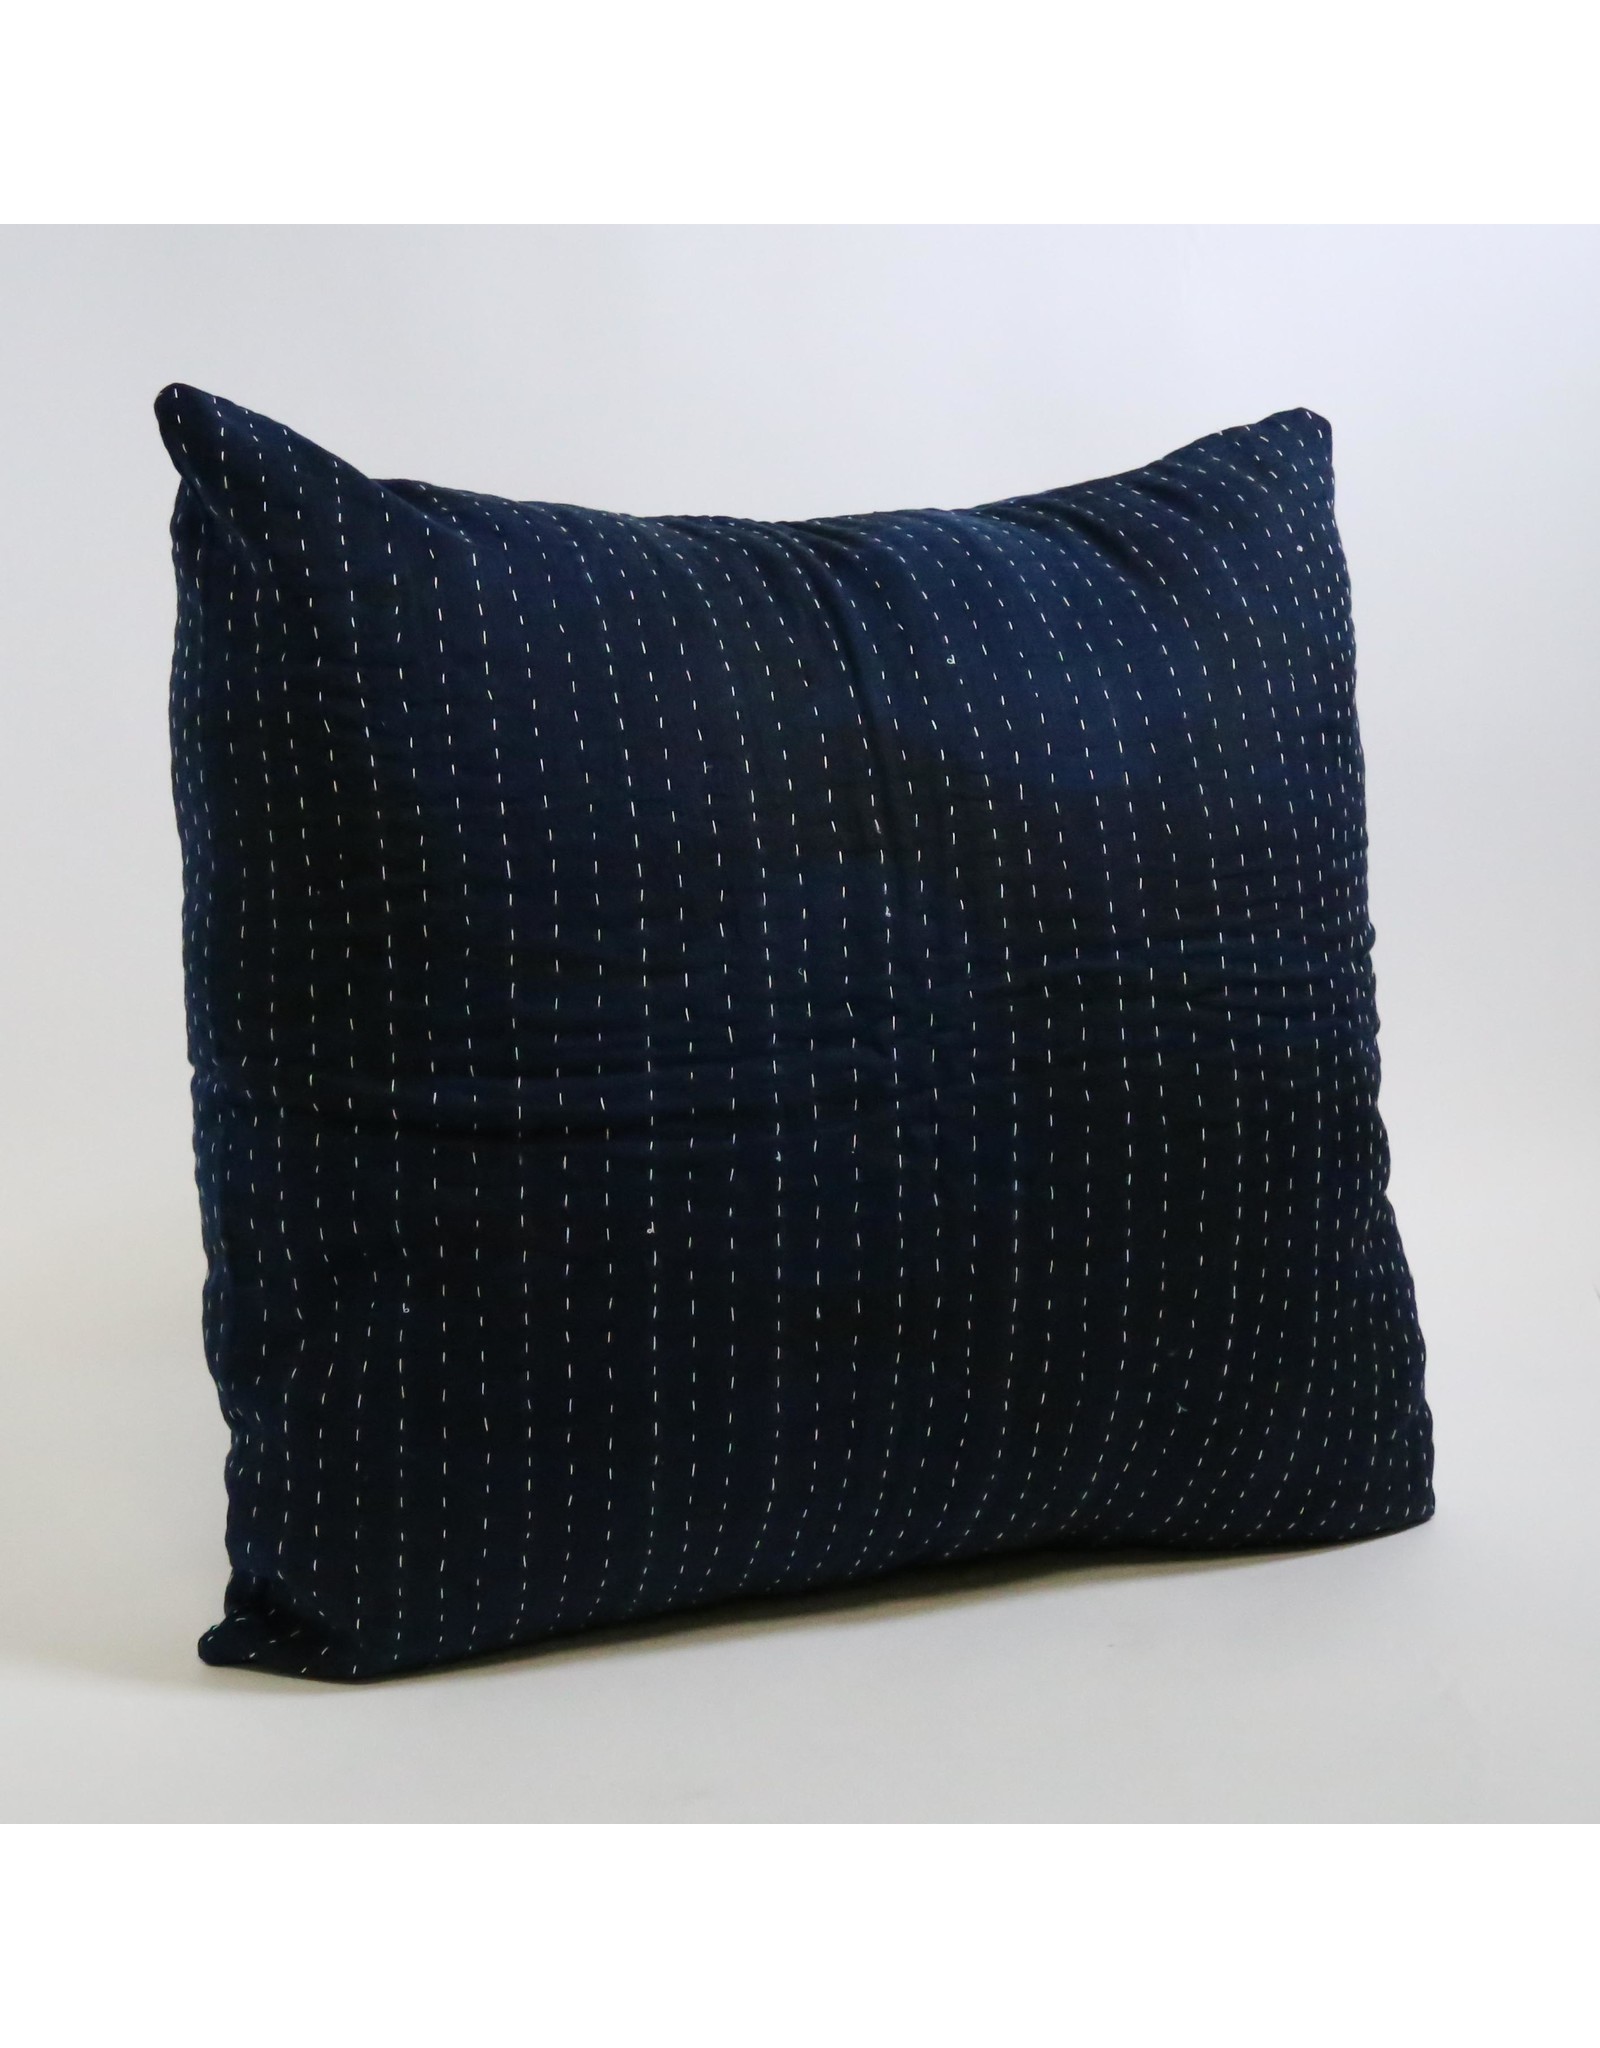 Pillow Case- Kantha 17.5 x 17.5 in